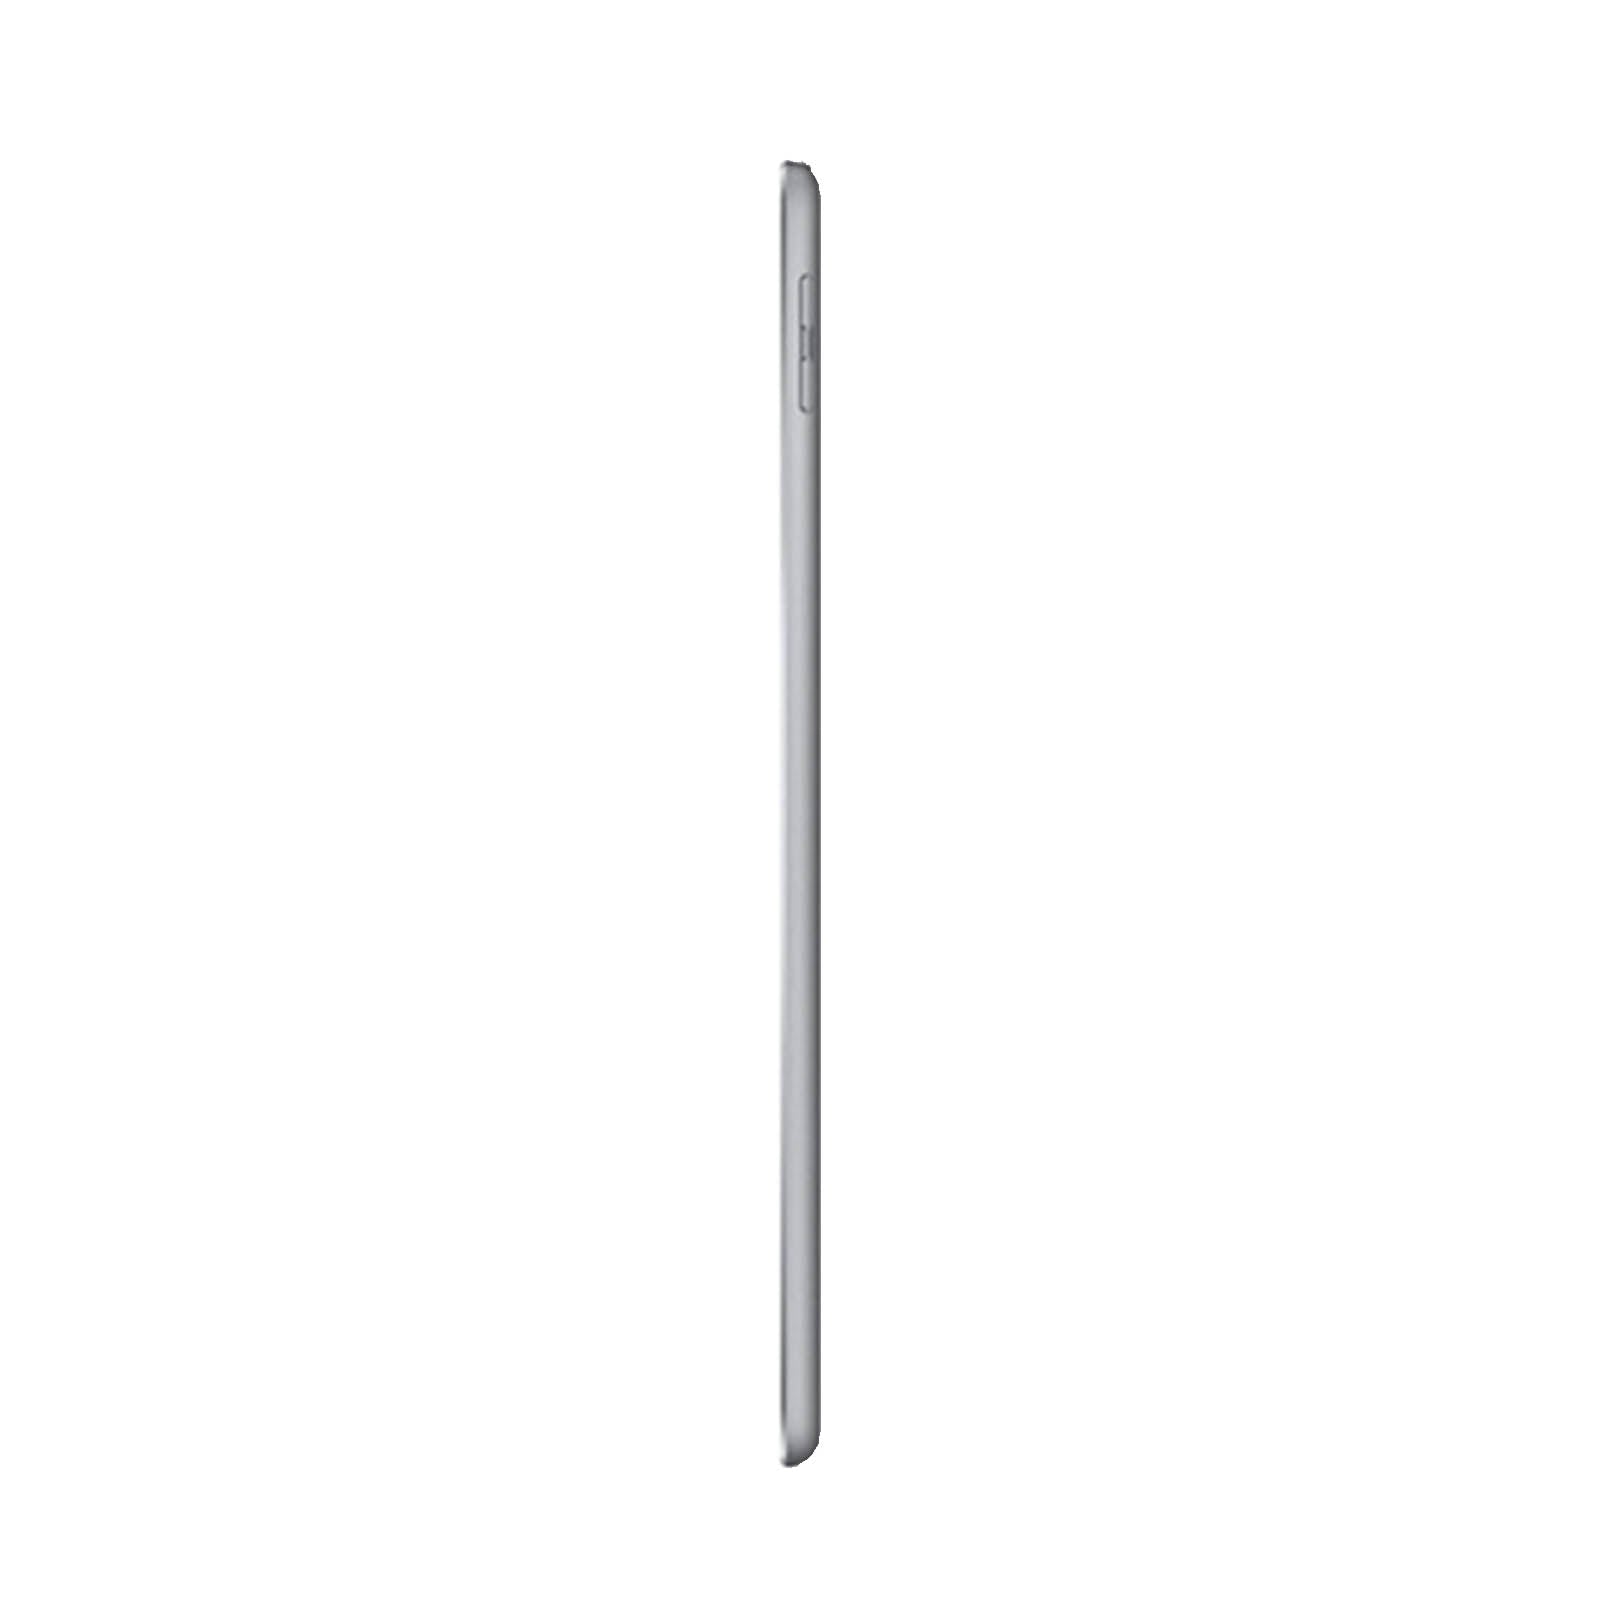 Apple iPad 4 16GB Black - WiFi - Good